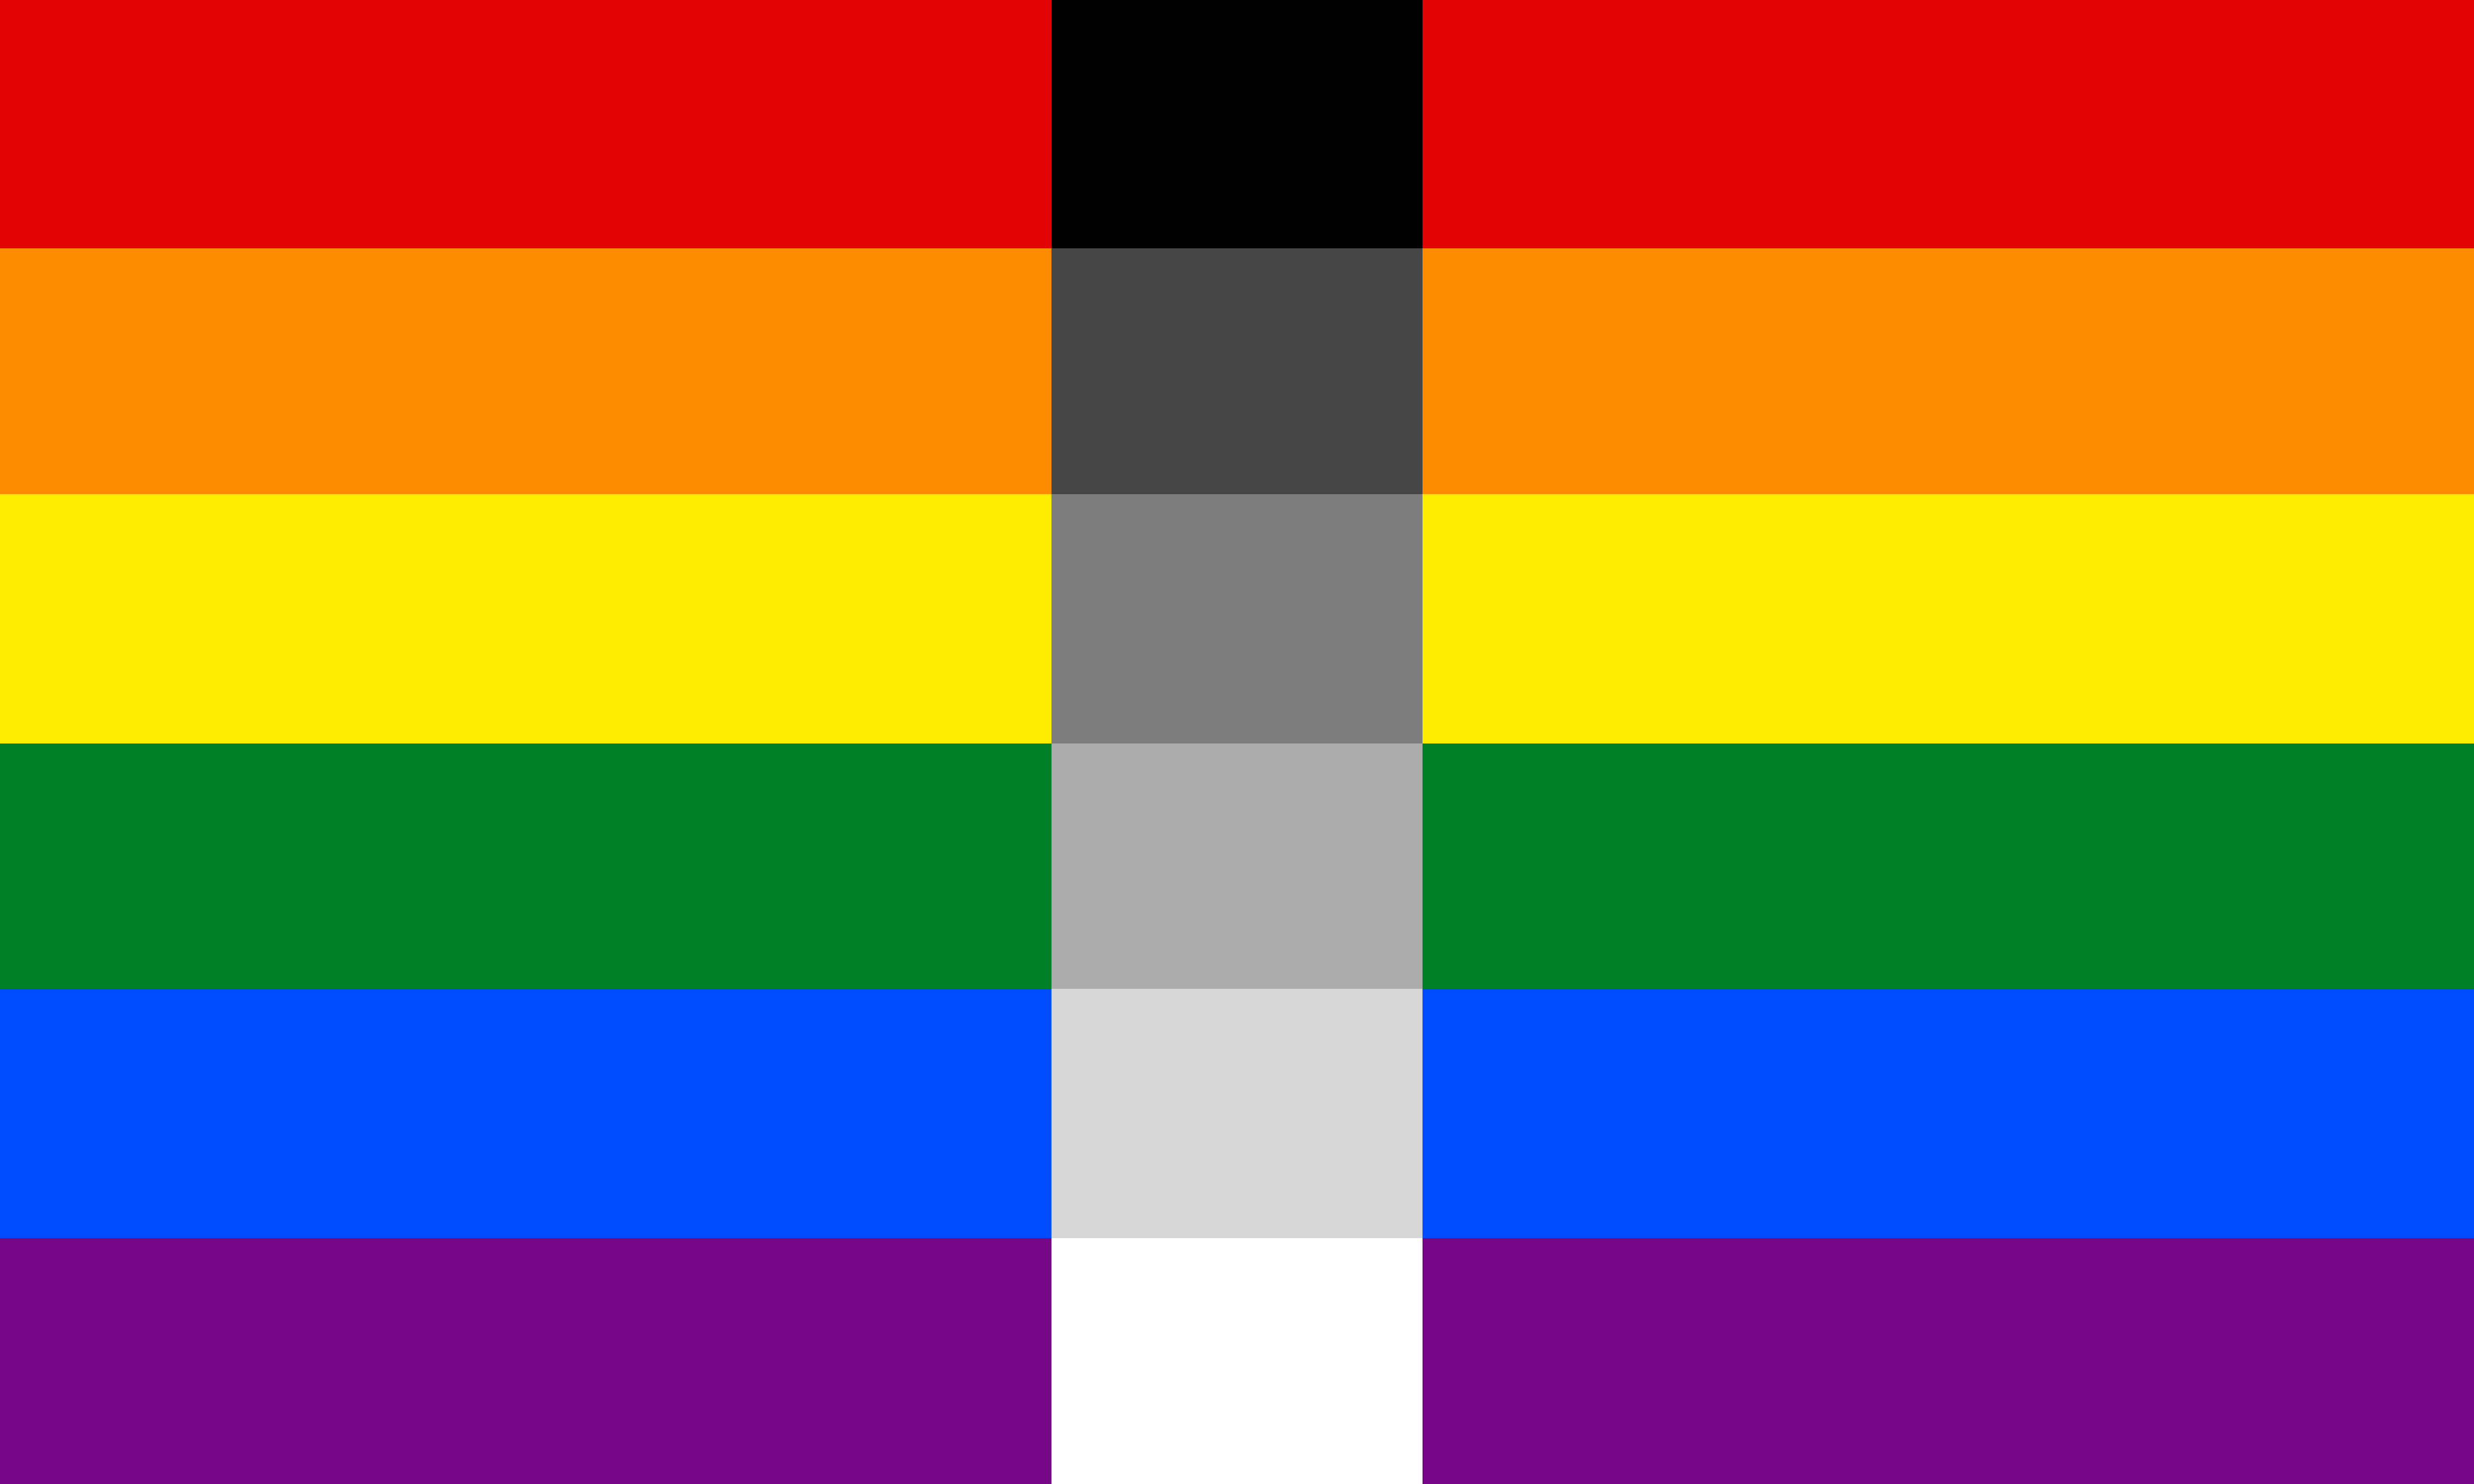 homoflexible 1 by_pride_flags-d8zu7qb.png 